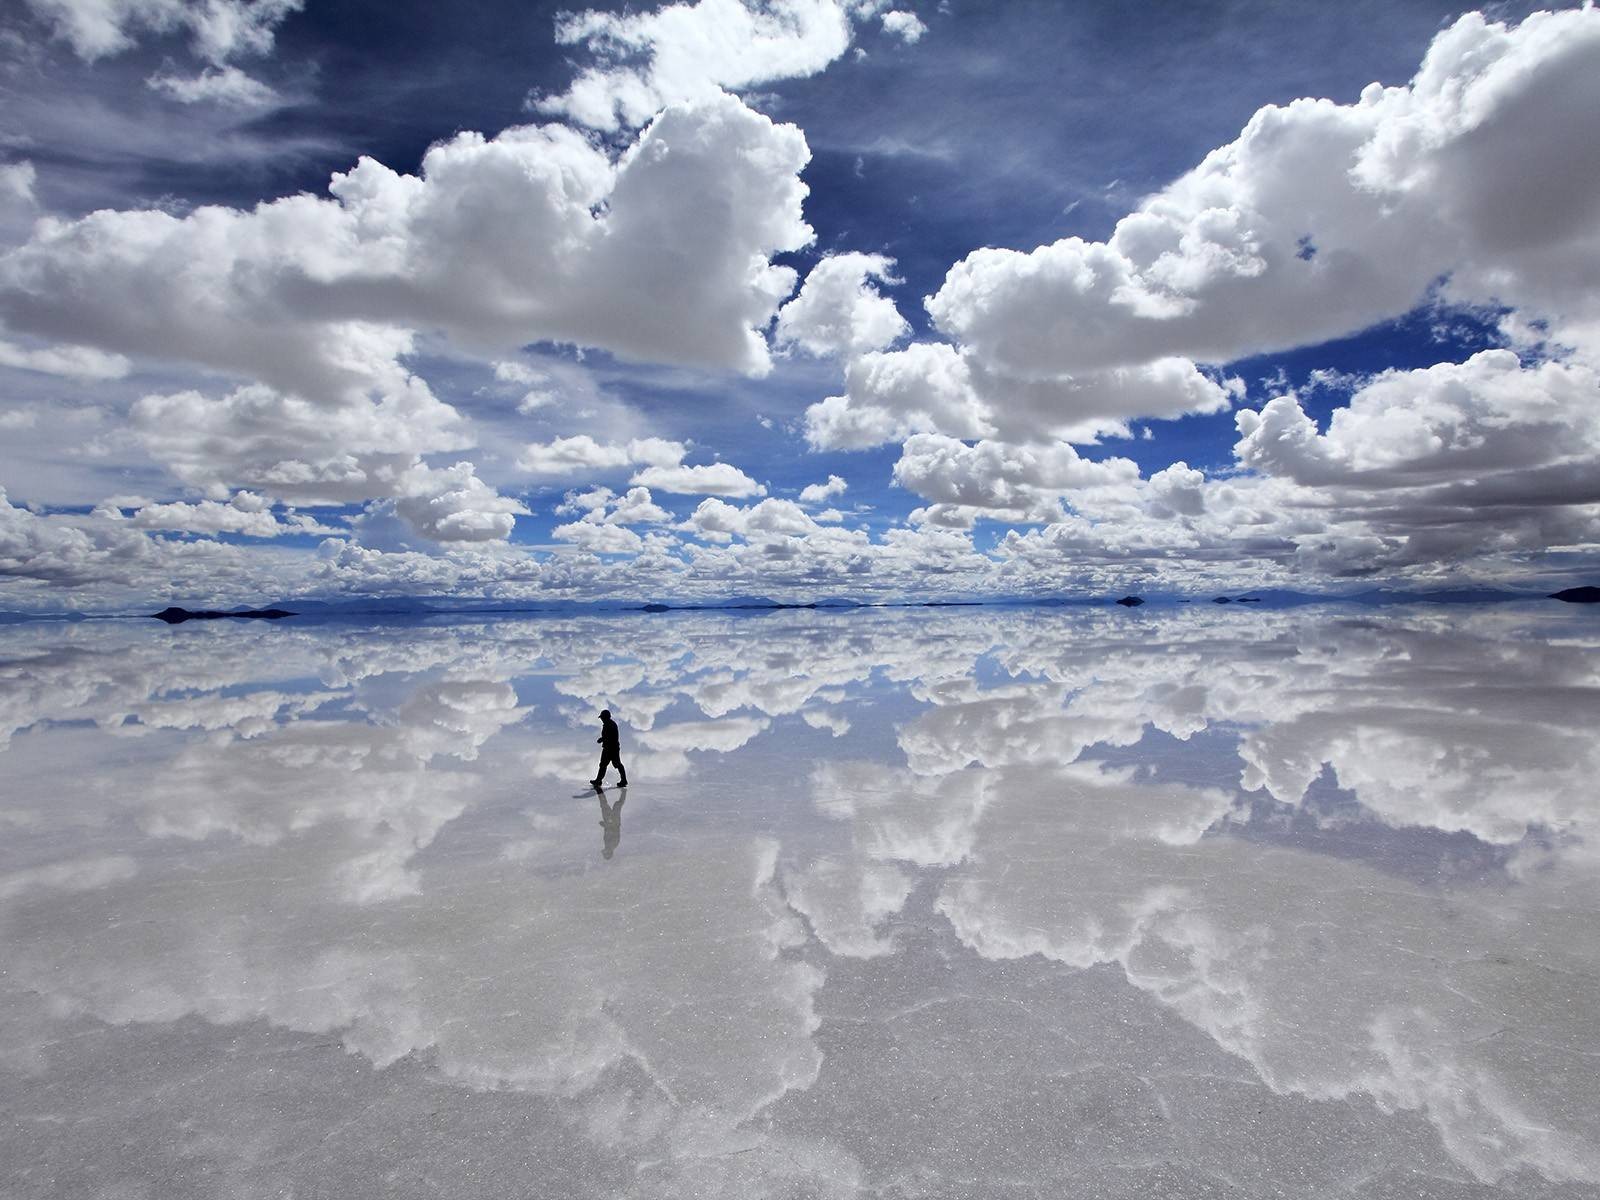 General 1600x1200 Bolivia clouds sky lake South America reflection landscape walking outdoors nature men men outdoors Salar de Uyuni